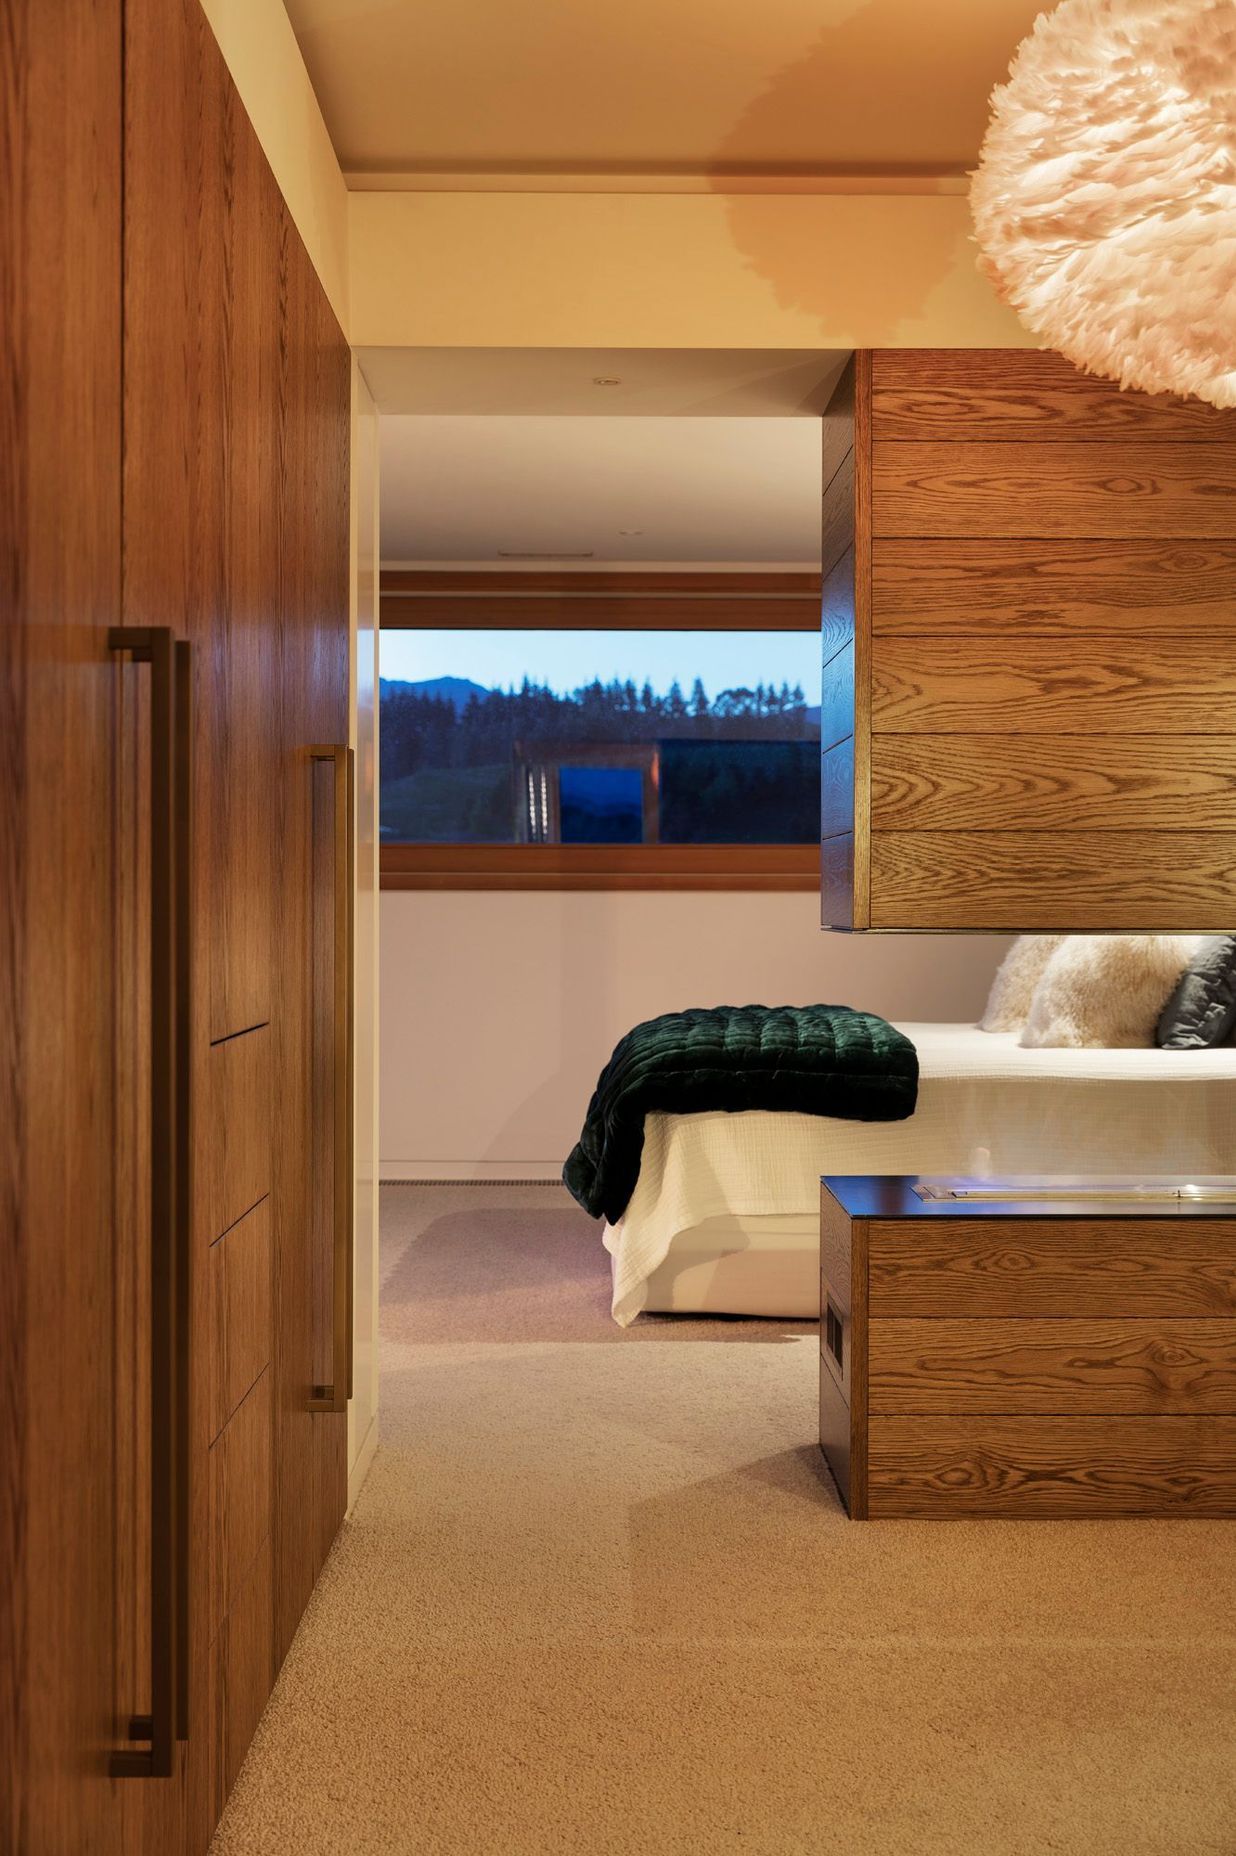 The master suite utilises bespoke oak cabinetry for plenty of storage.